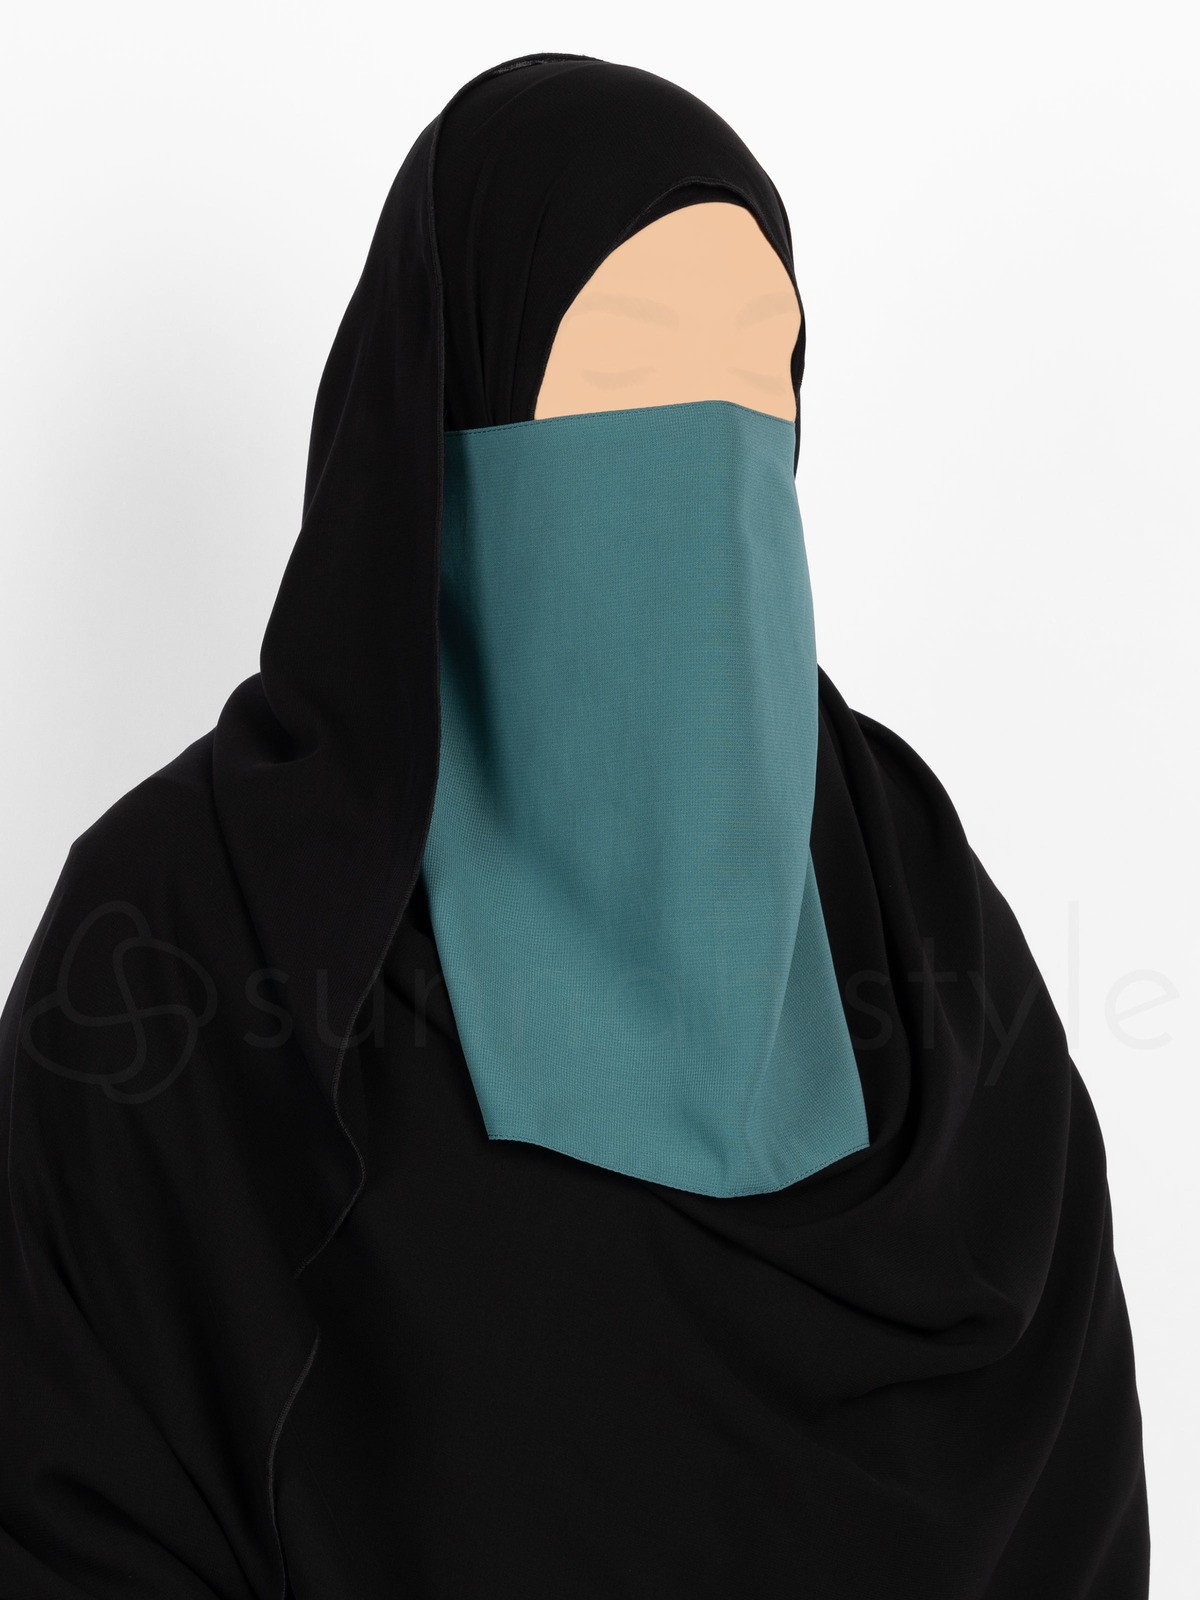 Sunnah Style - Elastic Half Niqab (Teal)